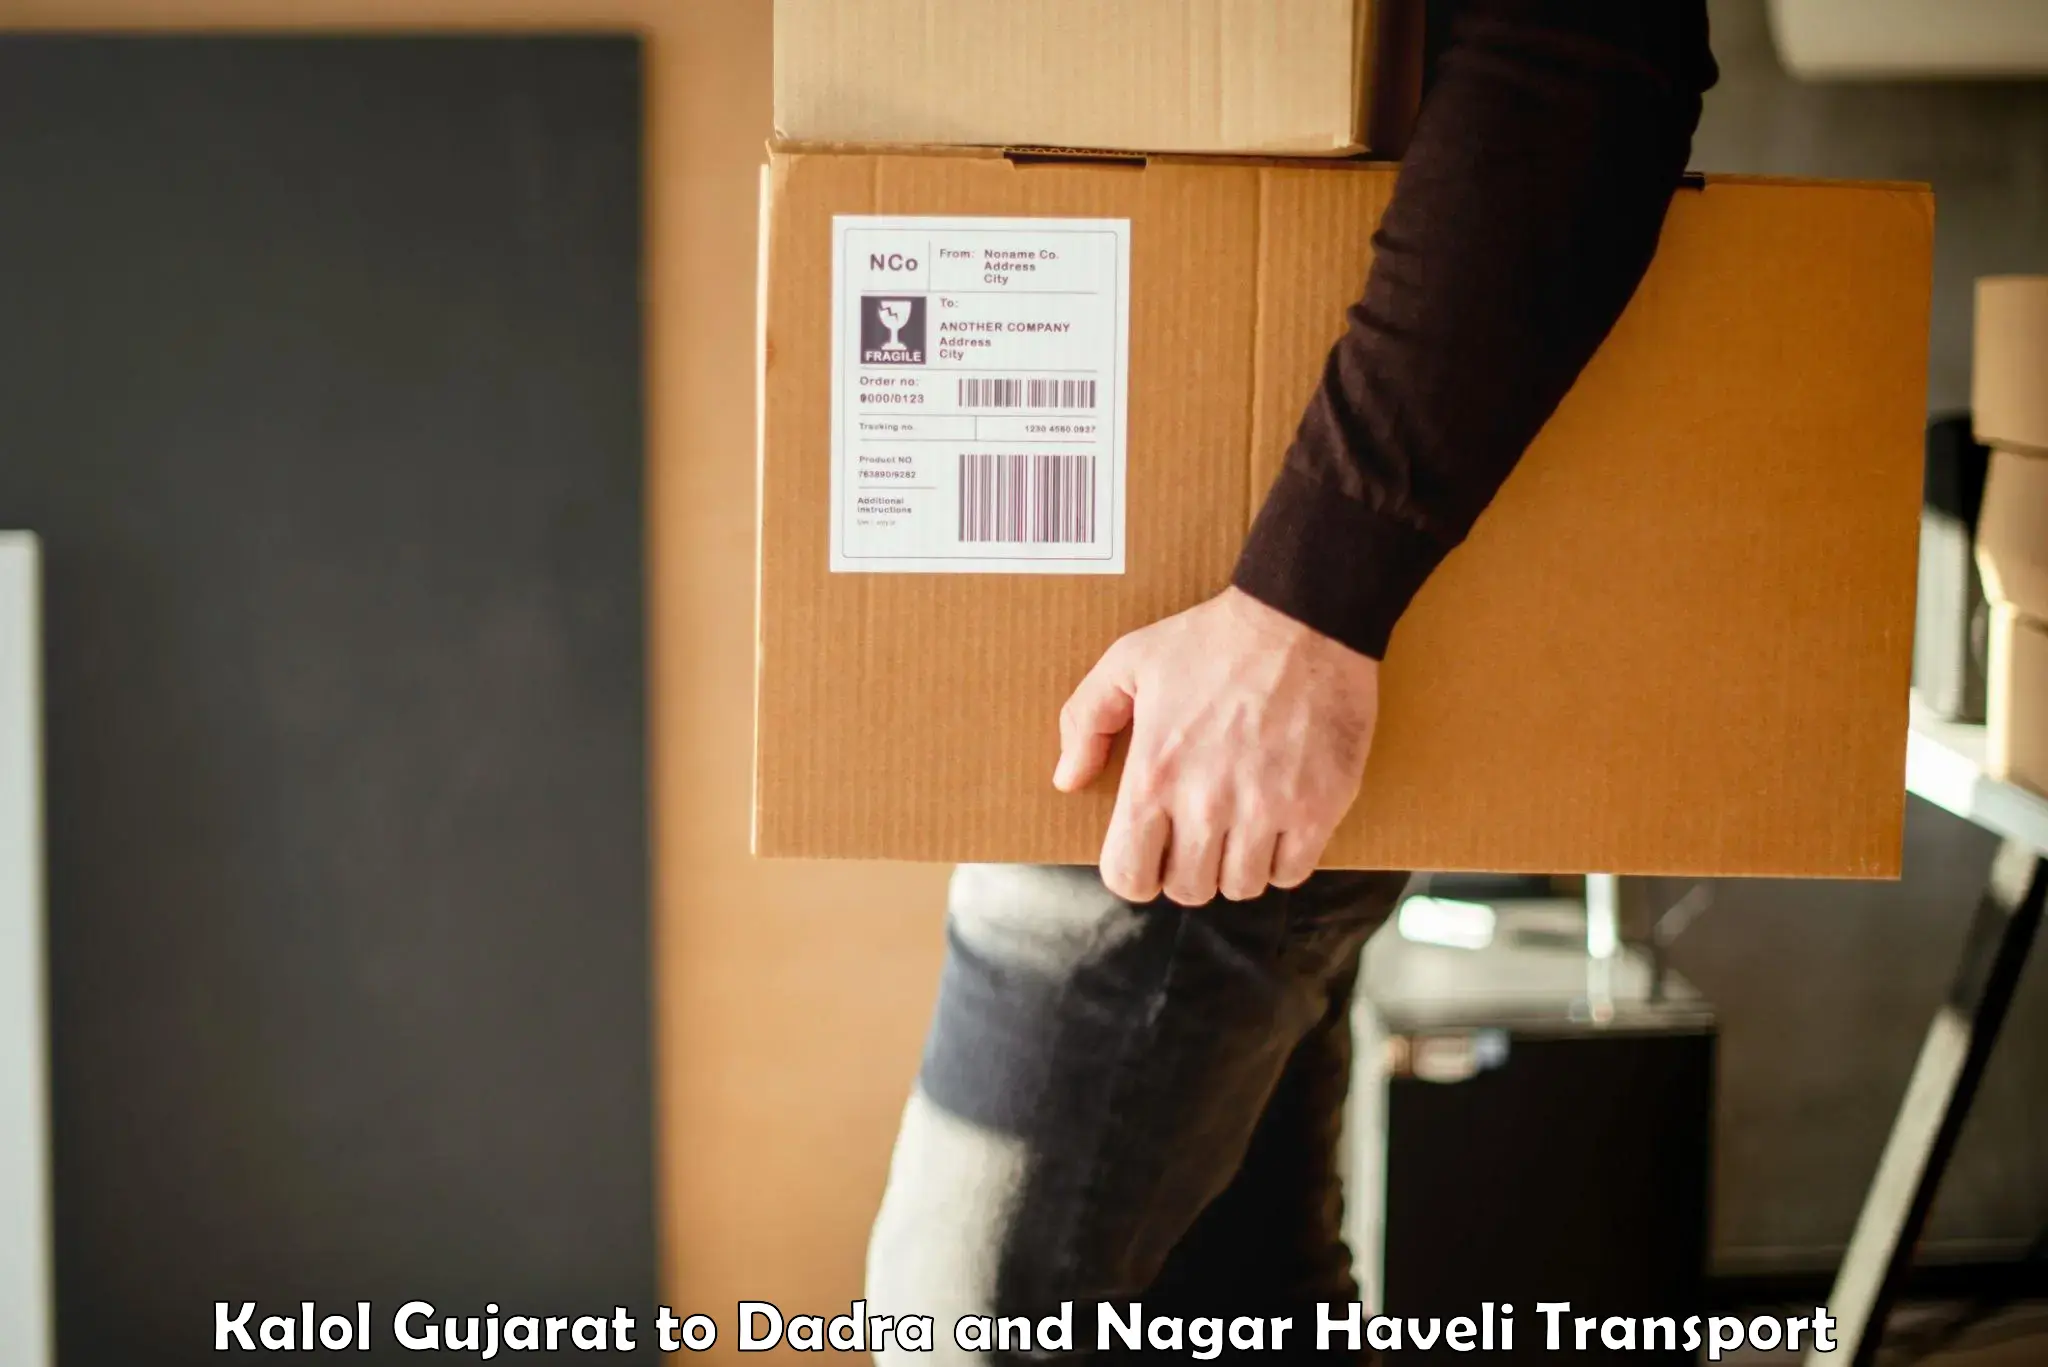 Cargo transport services Kalol Gujarat to Dadra and Nagar Haveli